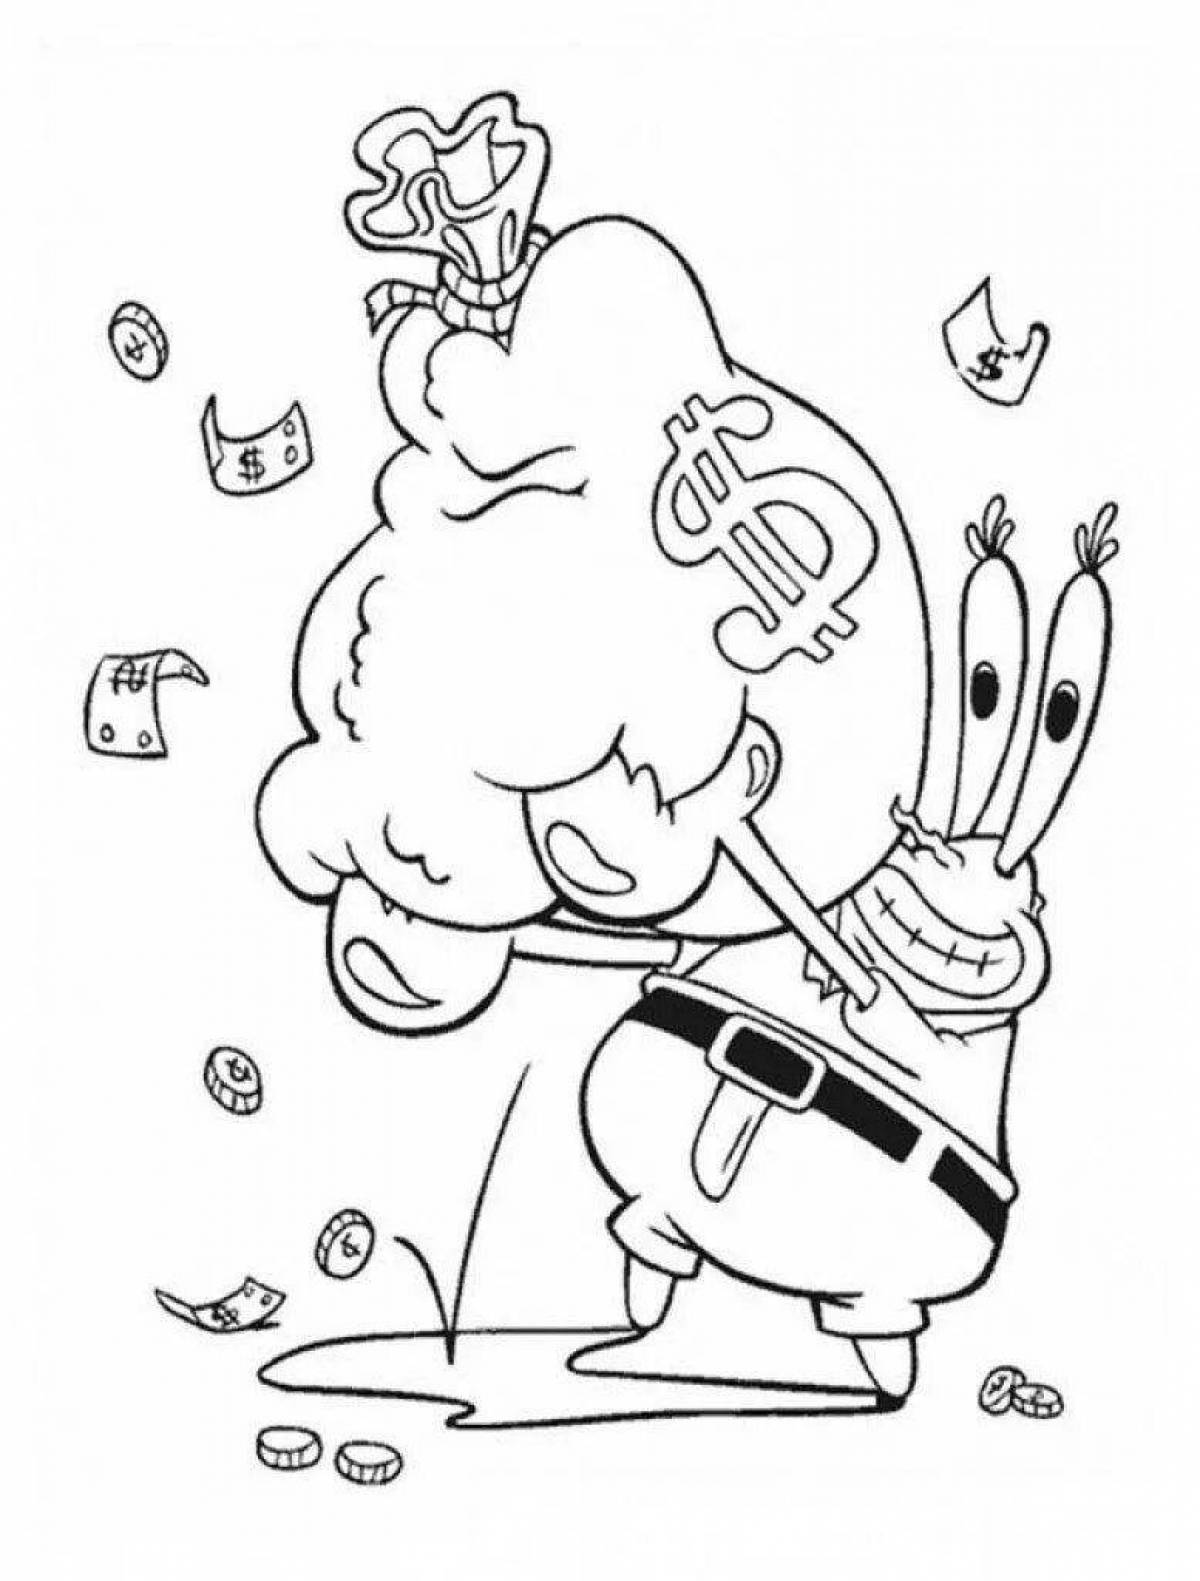 Shiny Krusty Krab coloring page